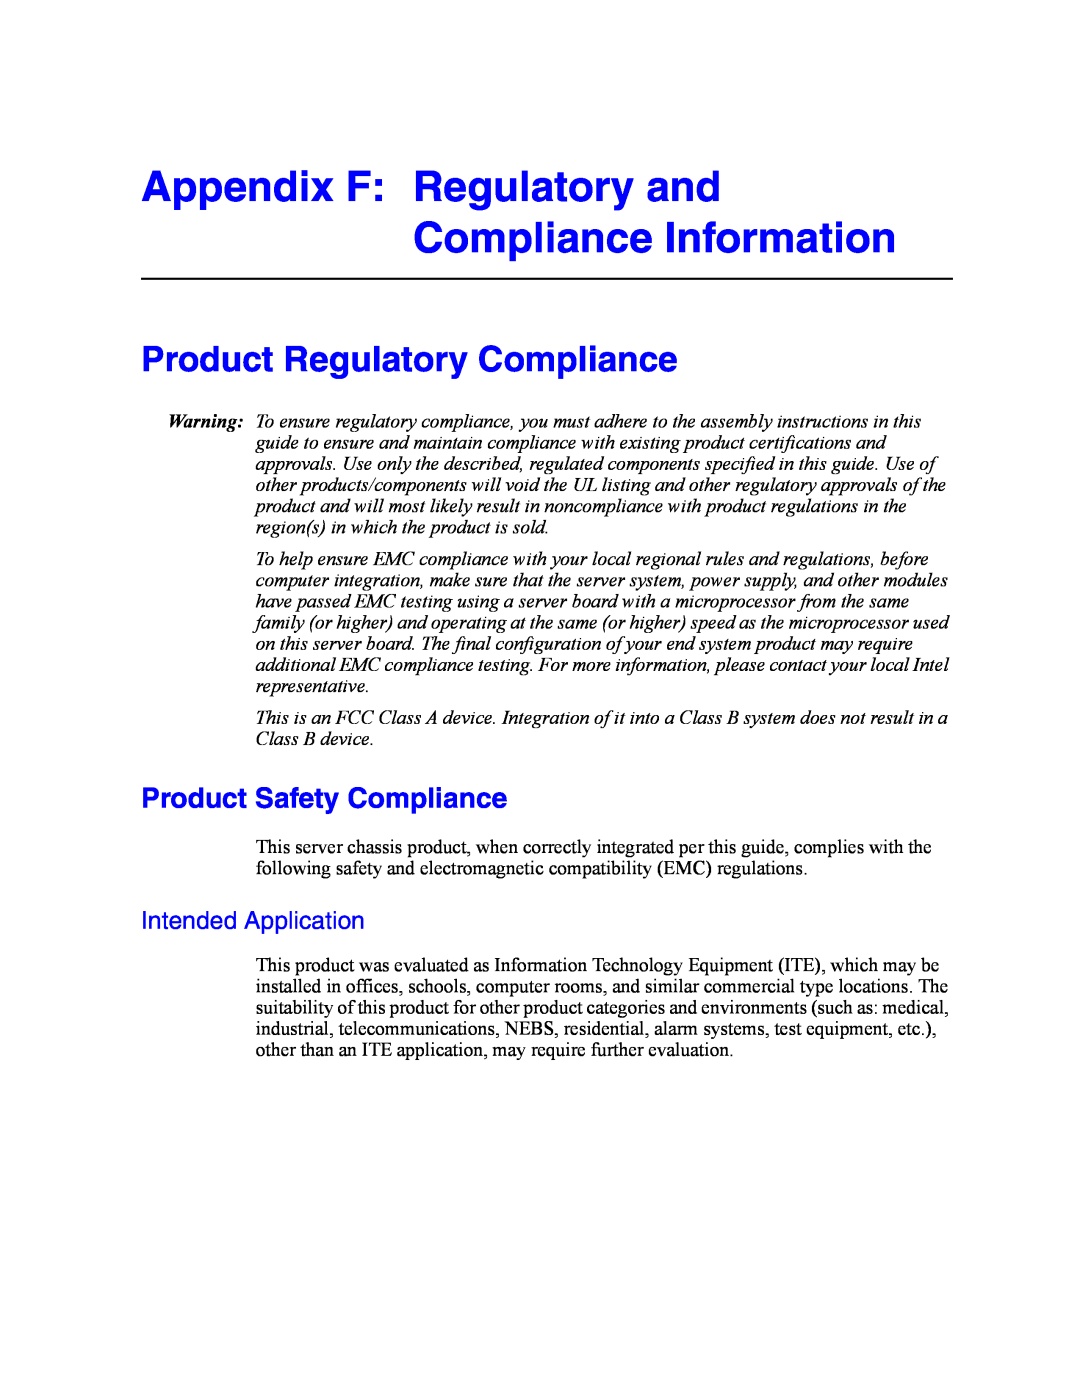 Intel SR2500AL Appendix F Regulatory and Compliance Information, Product Regulatory Compliance, Product Safety Compliance 